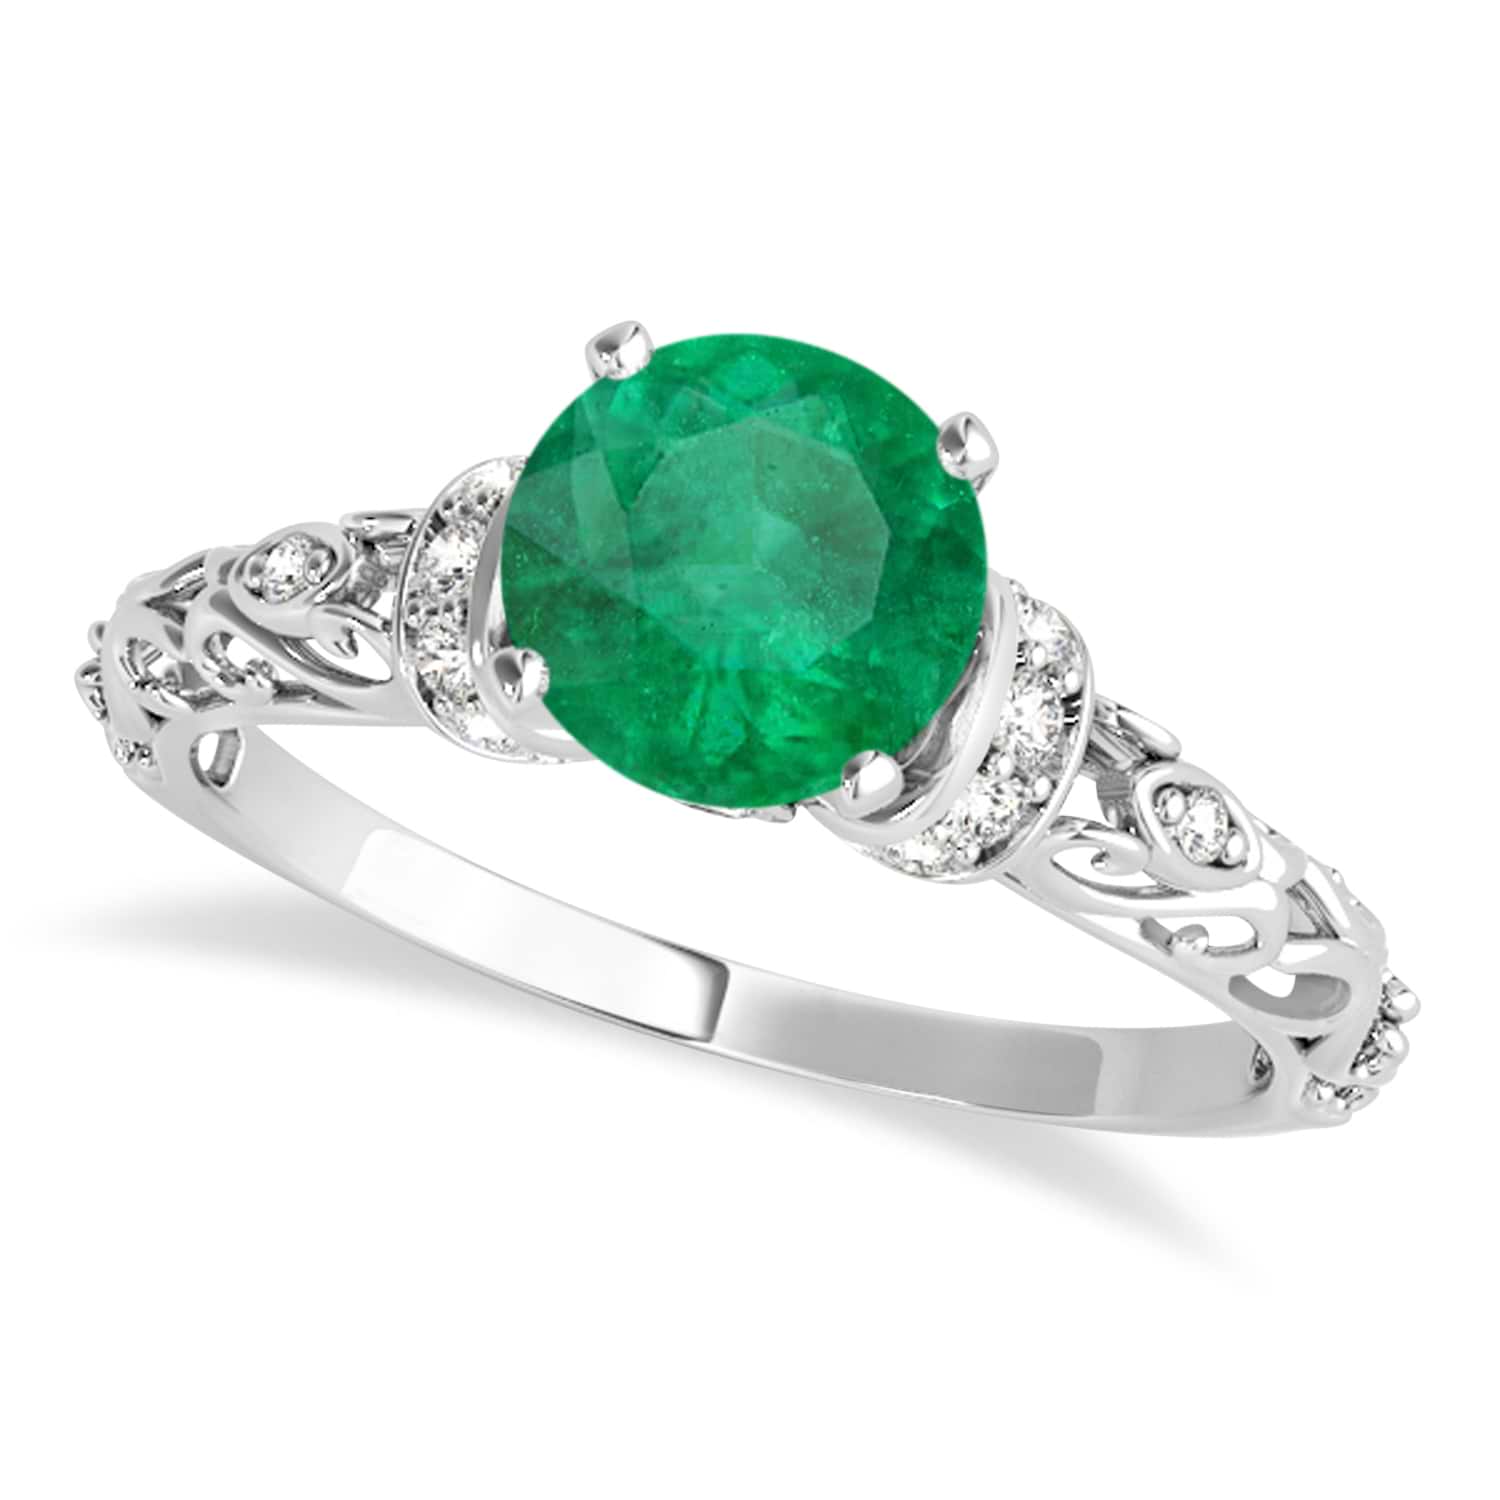 Emerald & Diamond Antique Style Engagement Ring 18k White Gold (1.12ct)